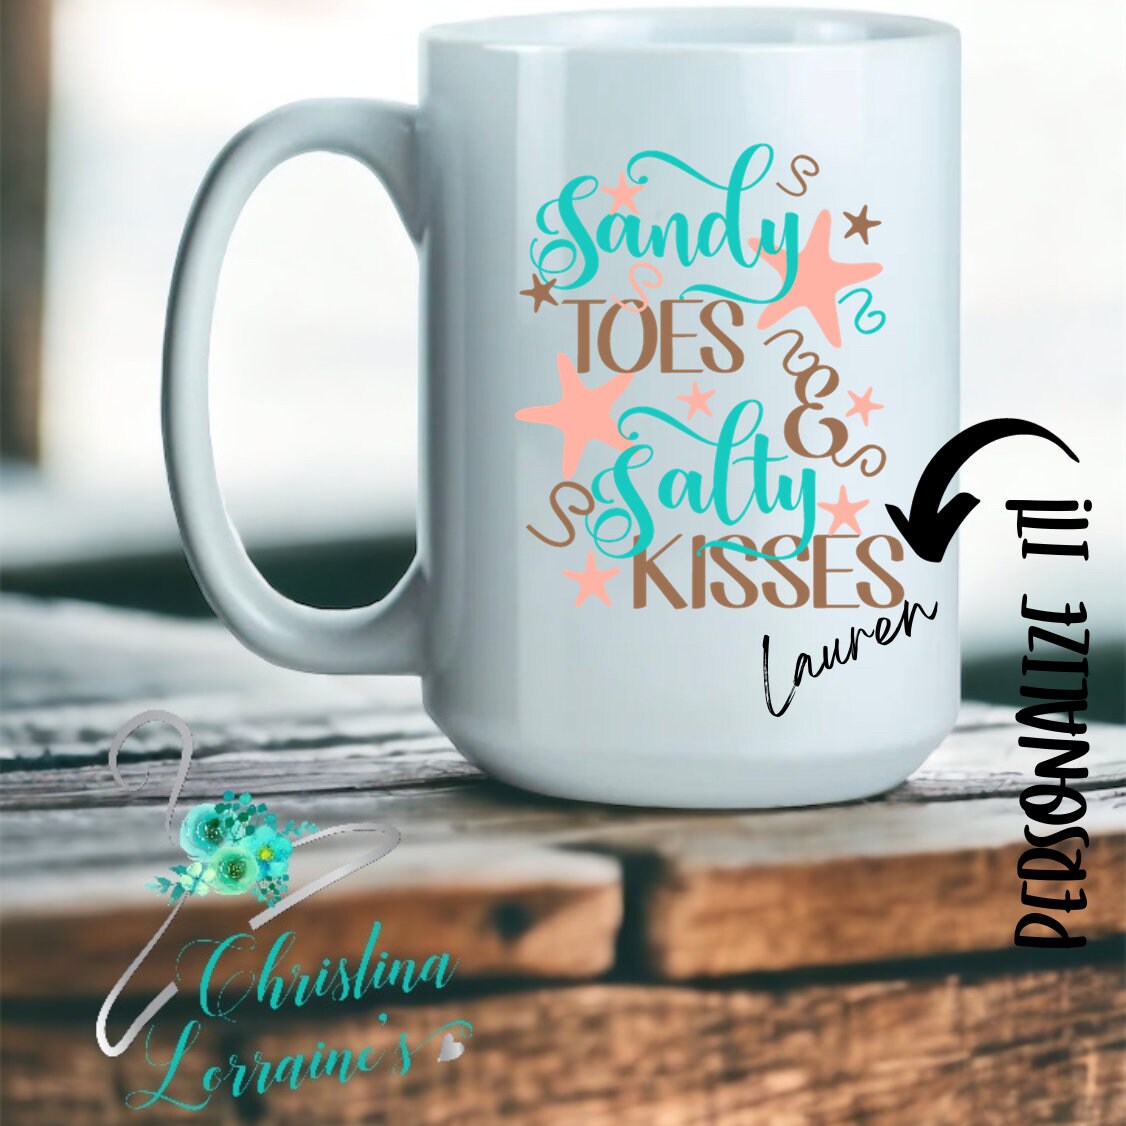 Sandy Toes & Salty Kisses/Wine Tumbler